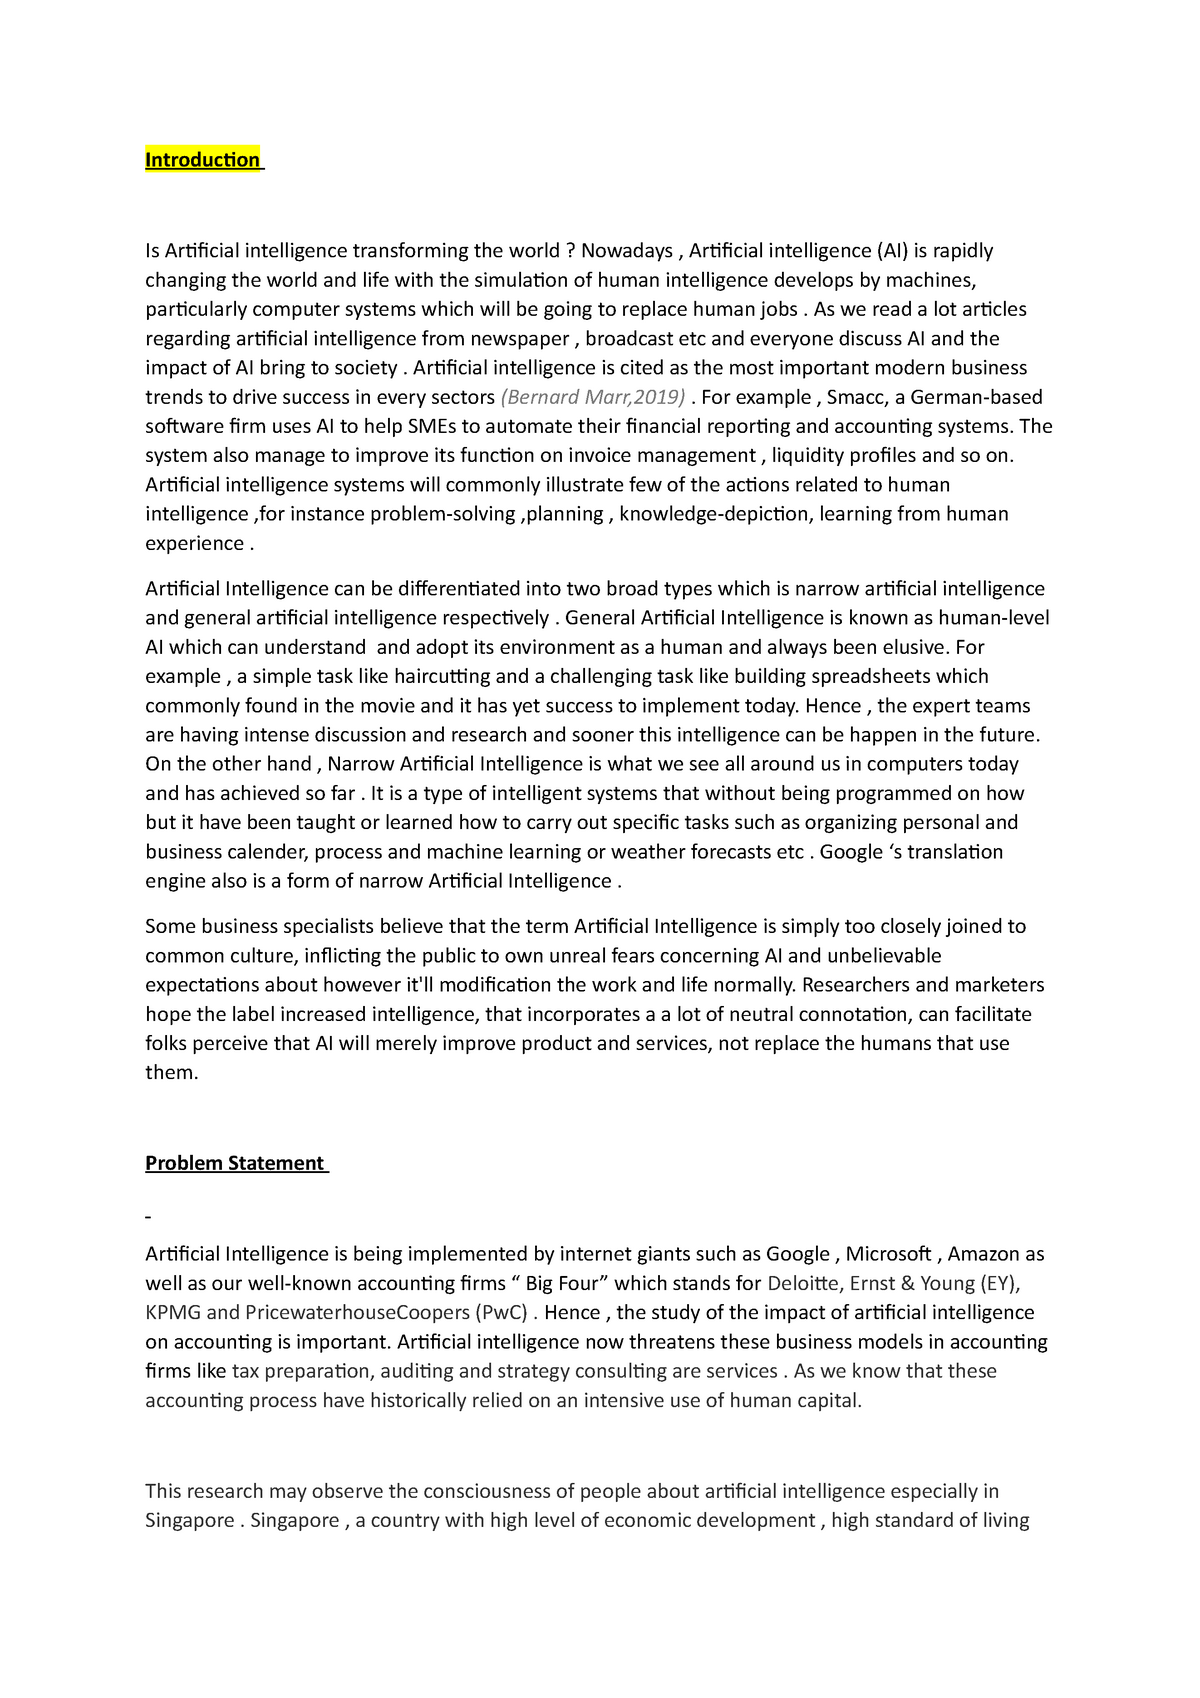 phd research proposal artificial intelligence pdf